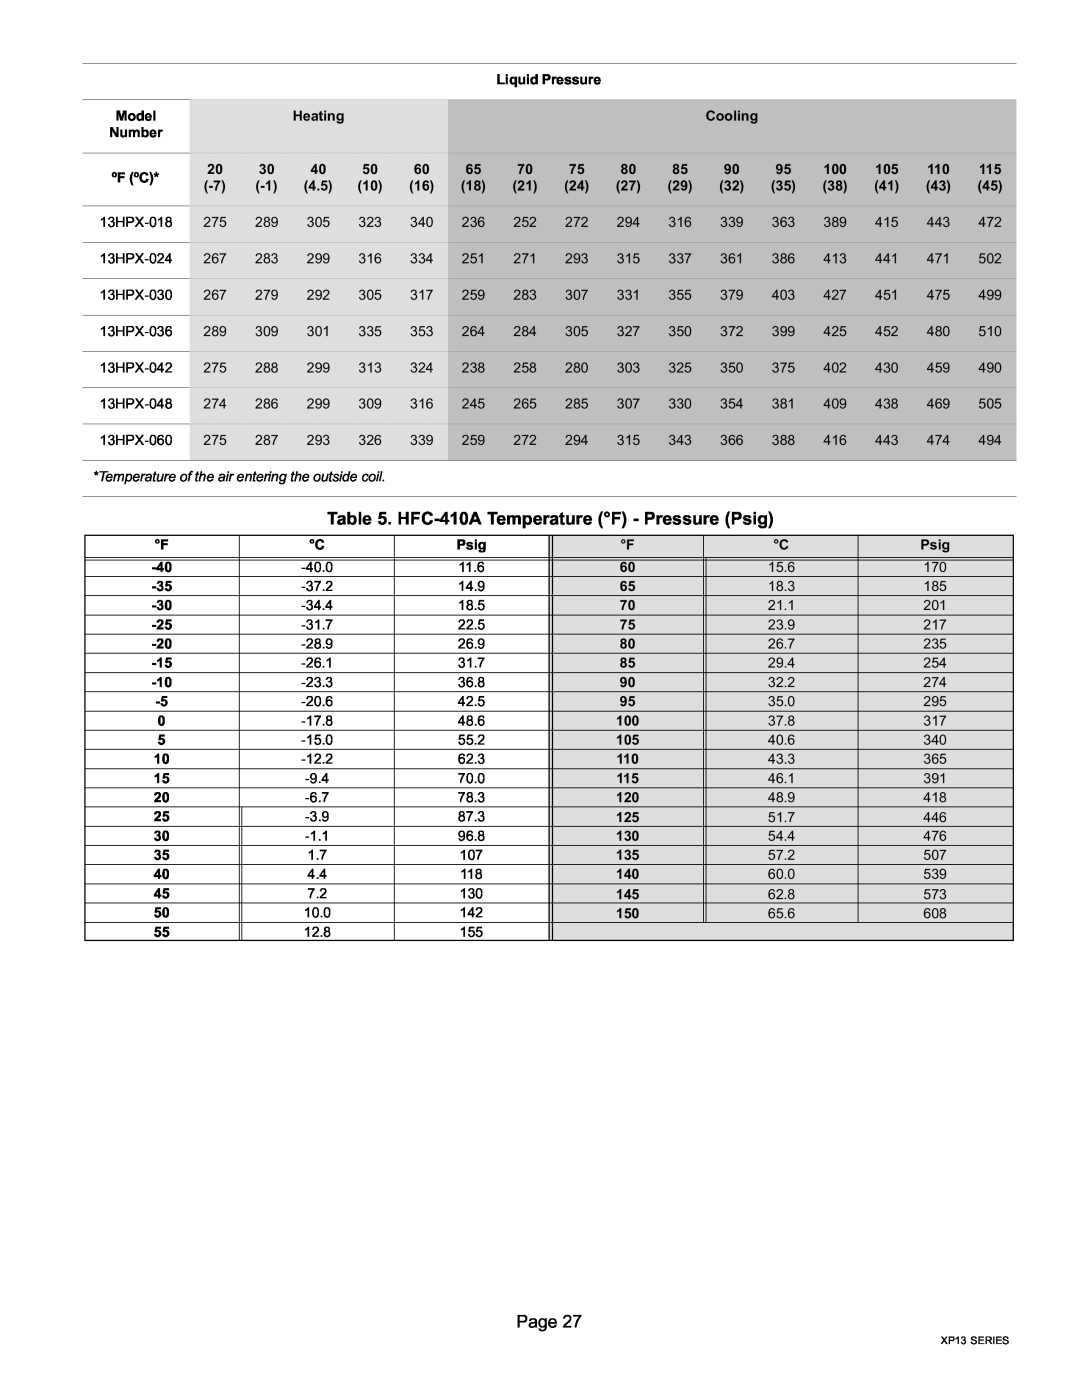 Lennox International Inc LENNOX Elite Series XP13 Units HEAT PUMPS HFC−410A Temperature F − Pressure Psig, Page 